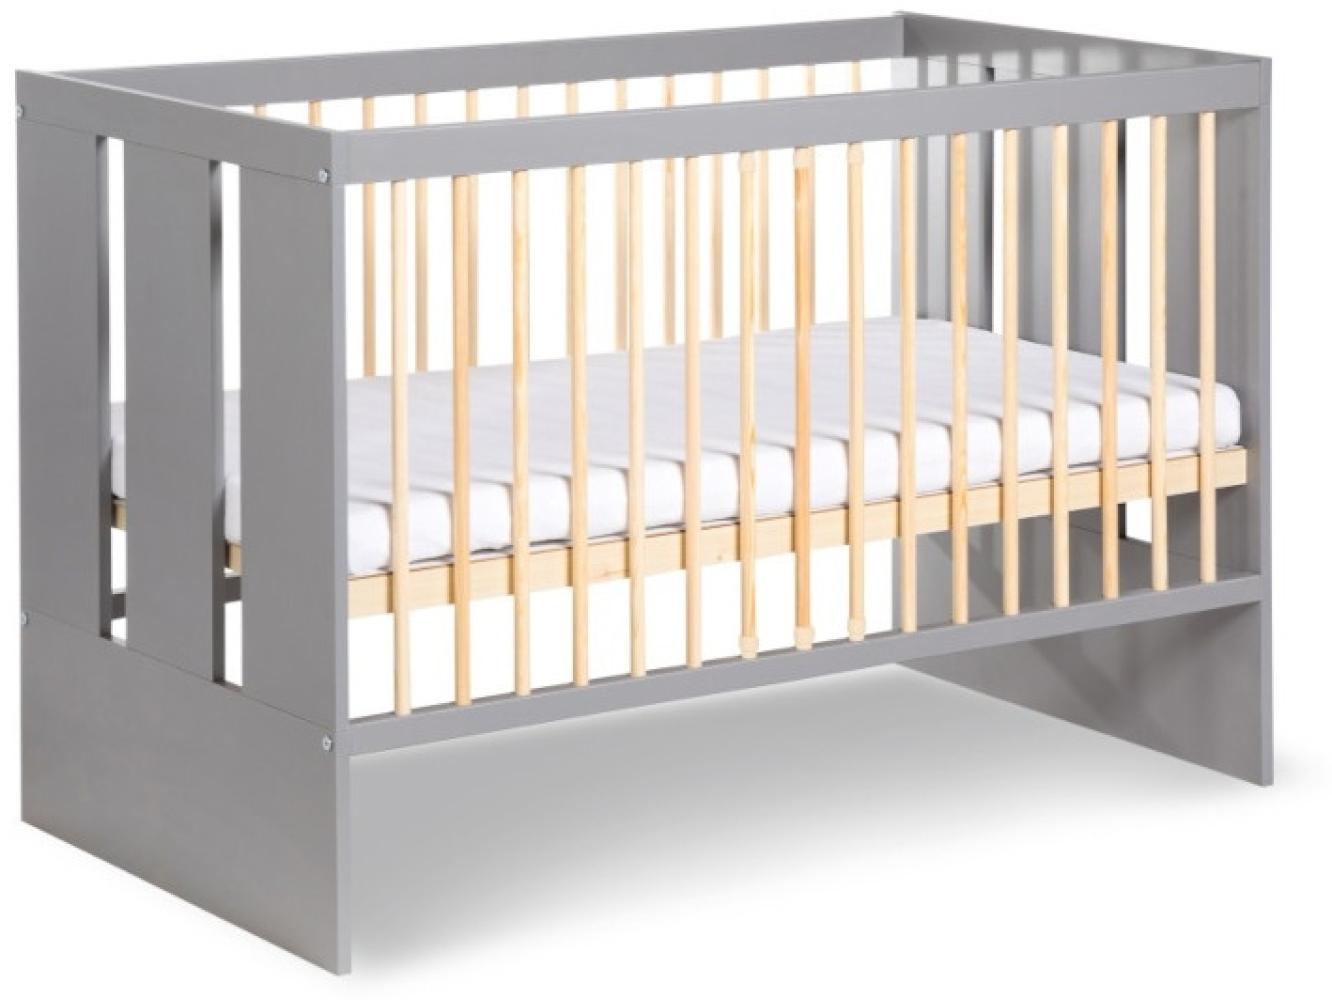 Kinderbett mit Barriere NORBET,124x85x66,grau/Holz Bild 1